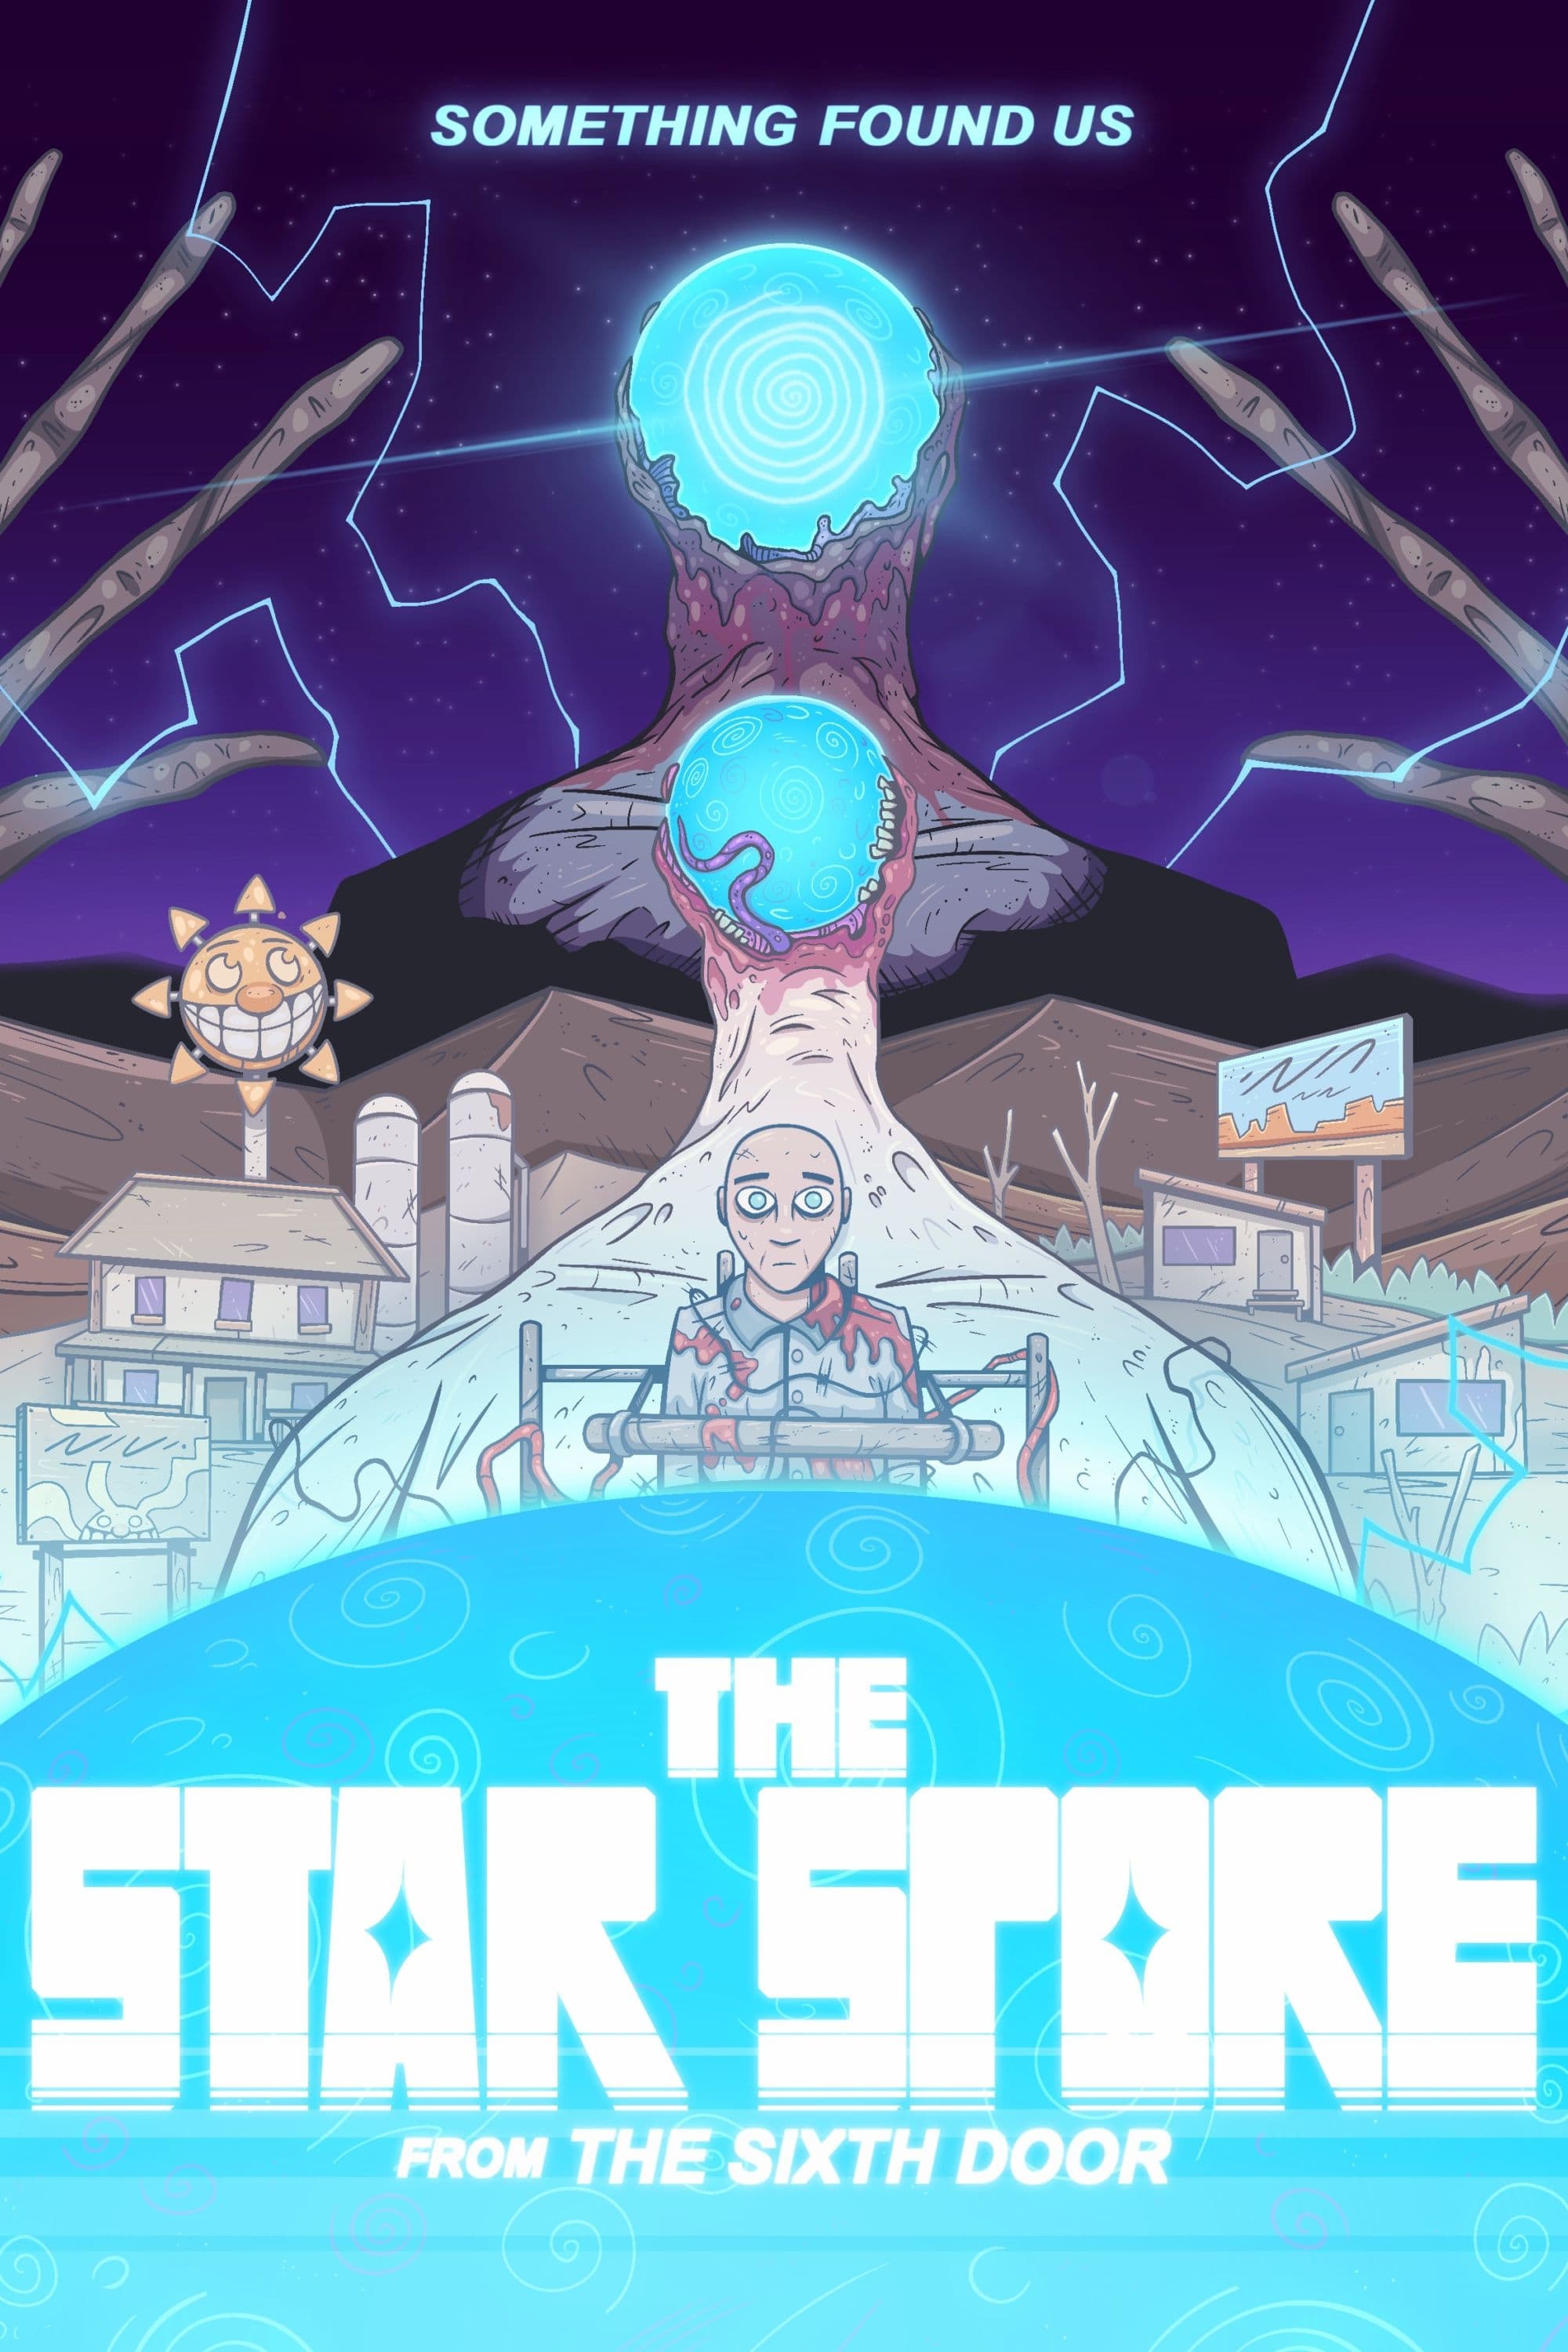 THE STAR SPORE